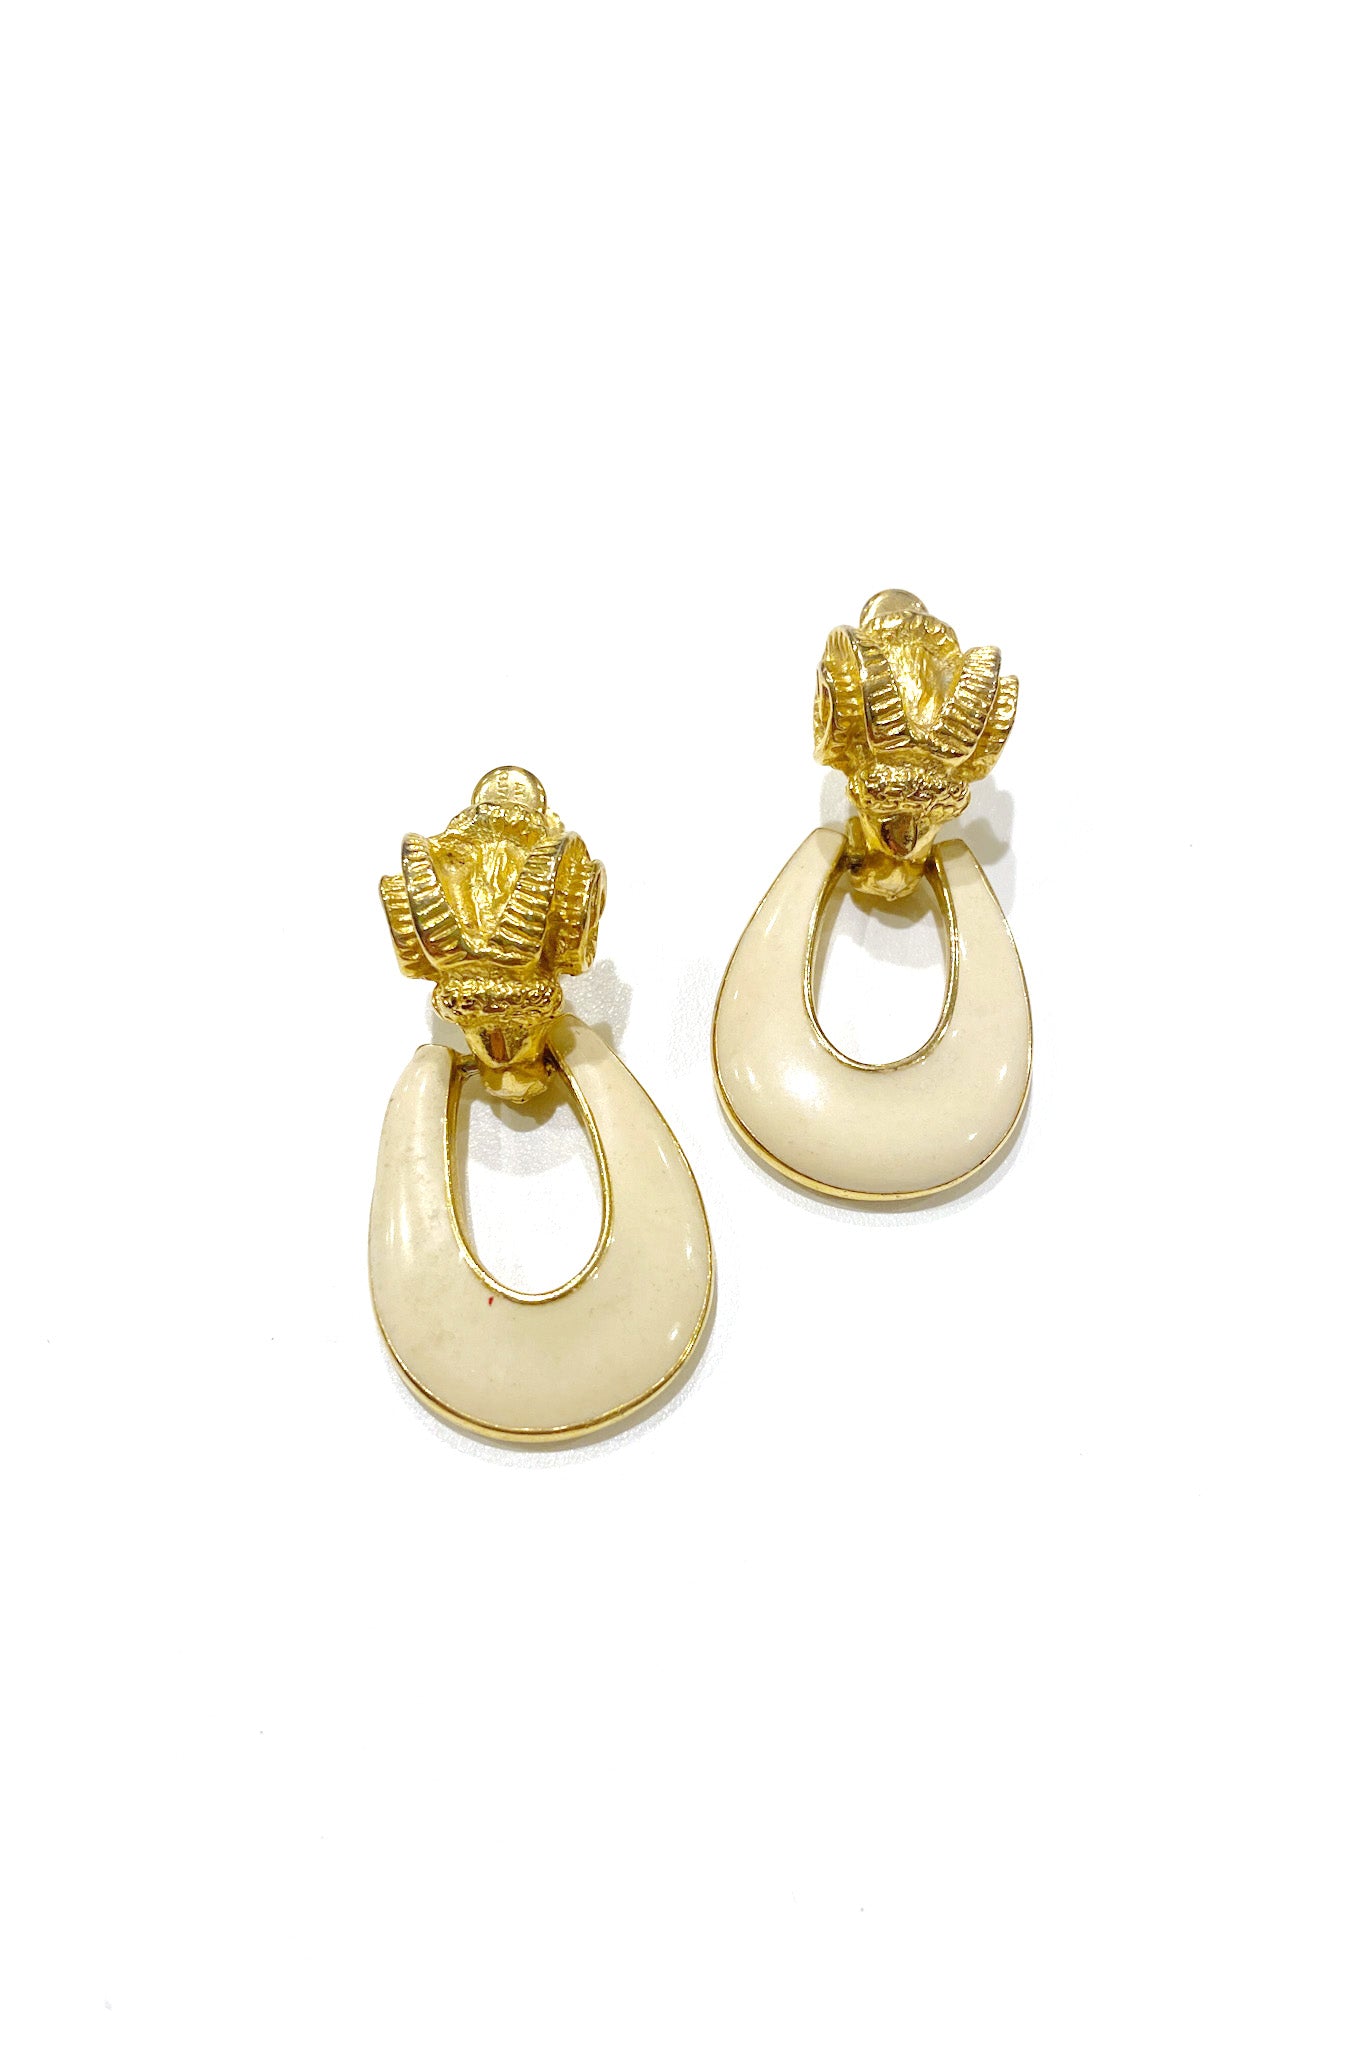 Vintage white x gold earring 清潔感とエレガンス